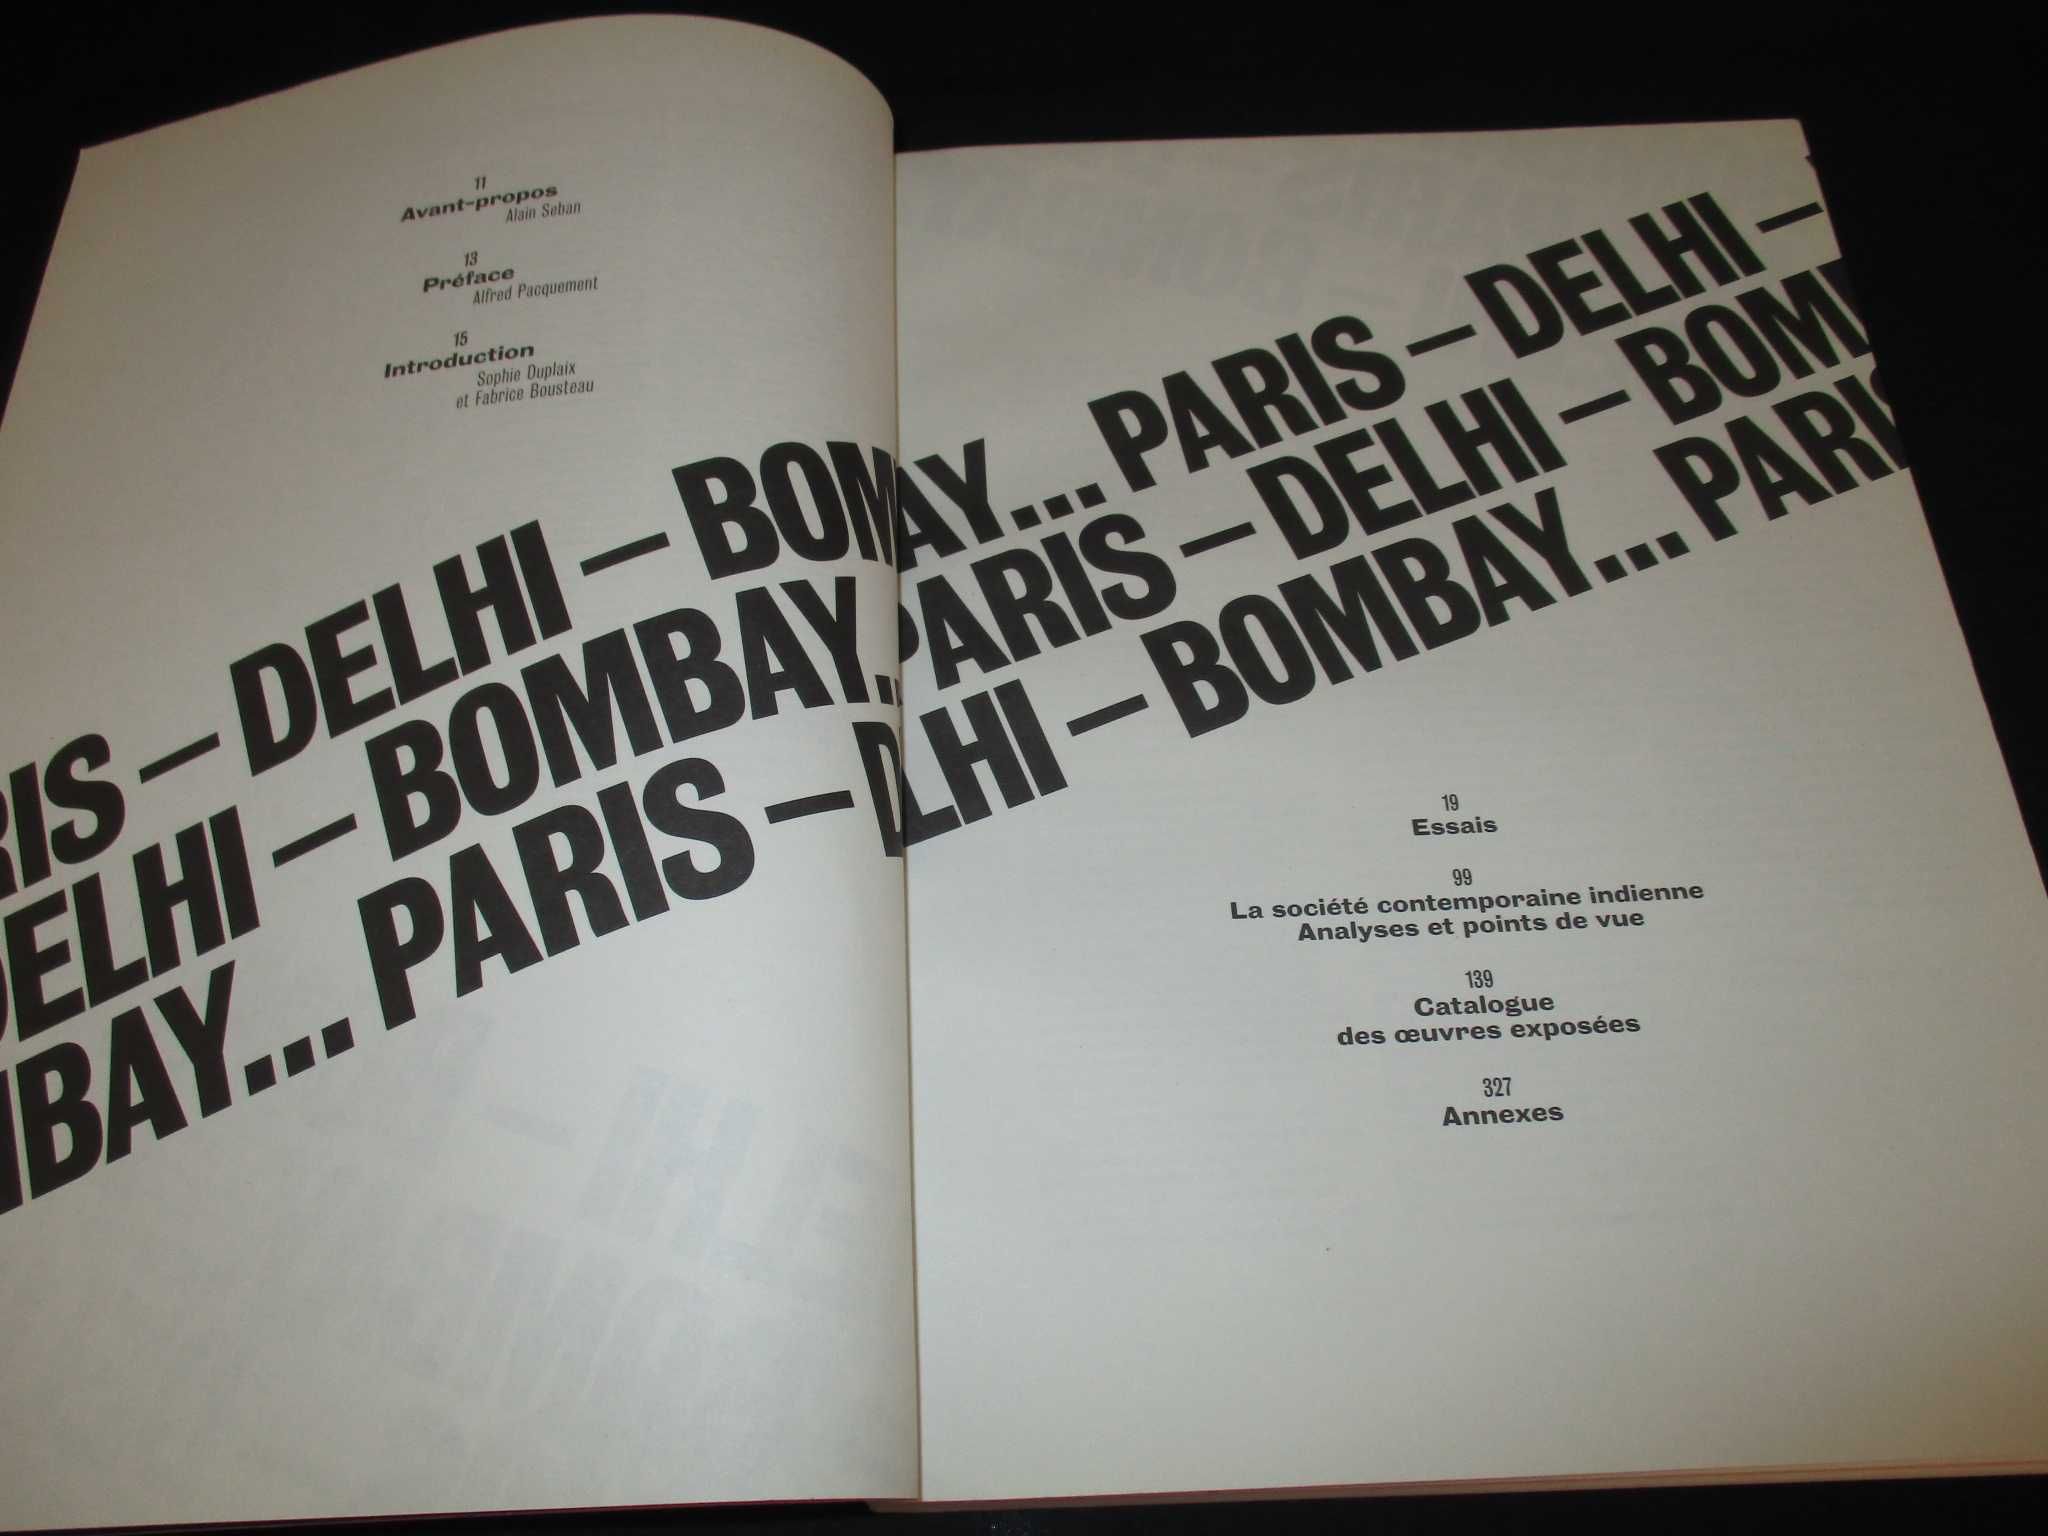 Livro Catalogue d'exposition Paris - Delhi - Bombay